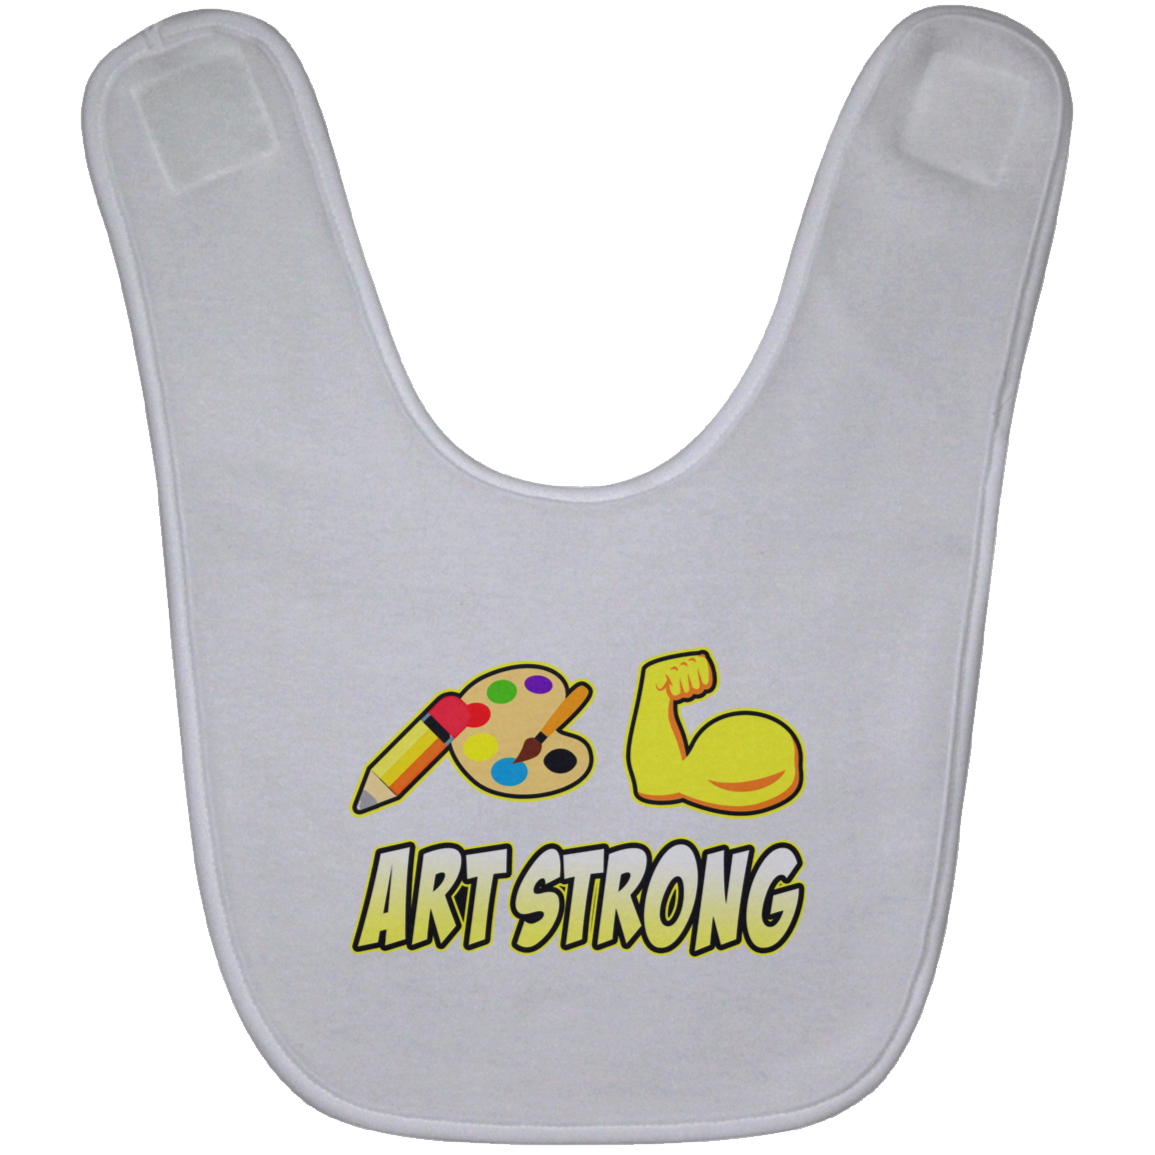 ArtichokeUSA Custom Design. Art Strong. Baby Bib